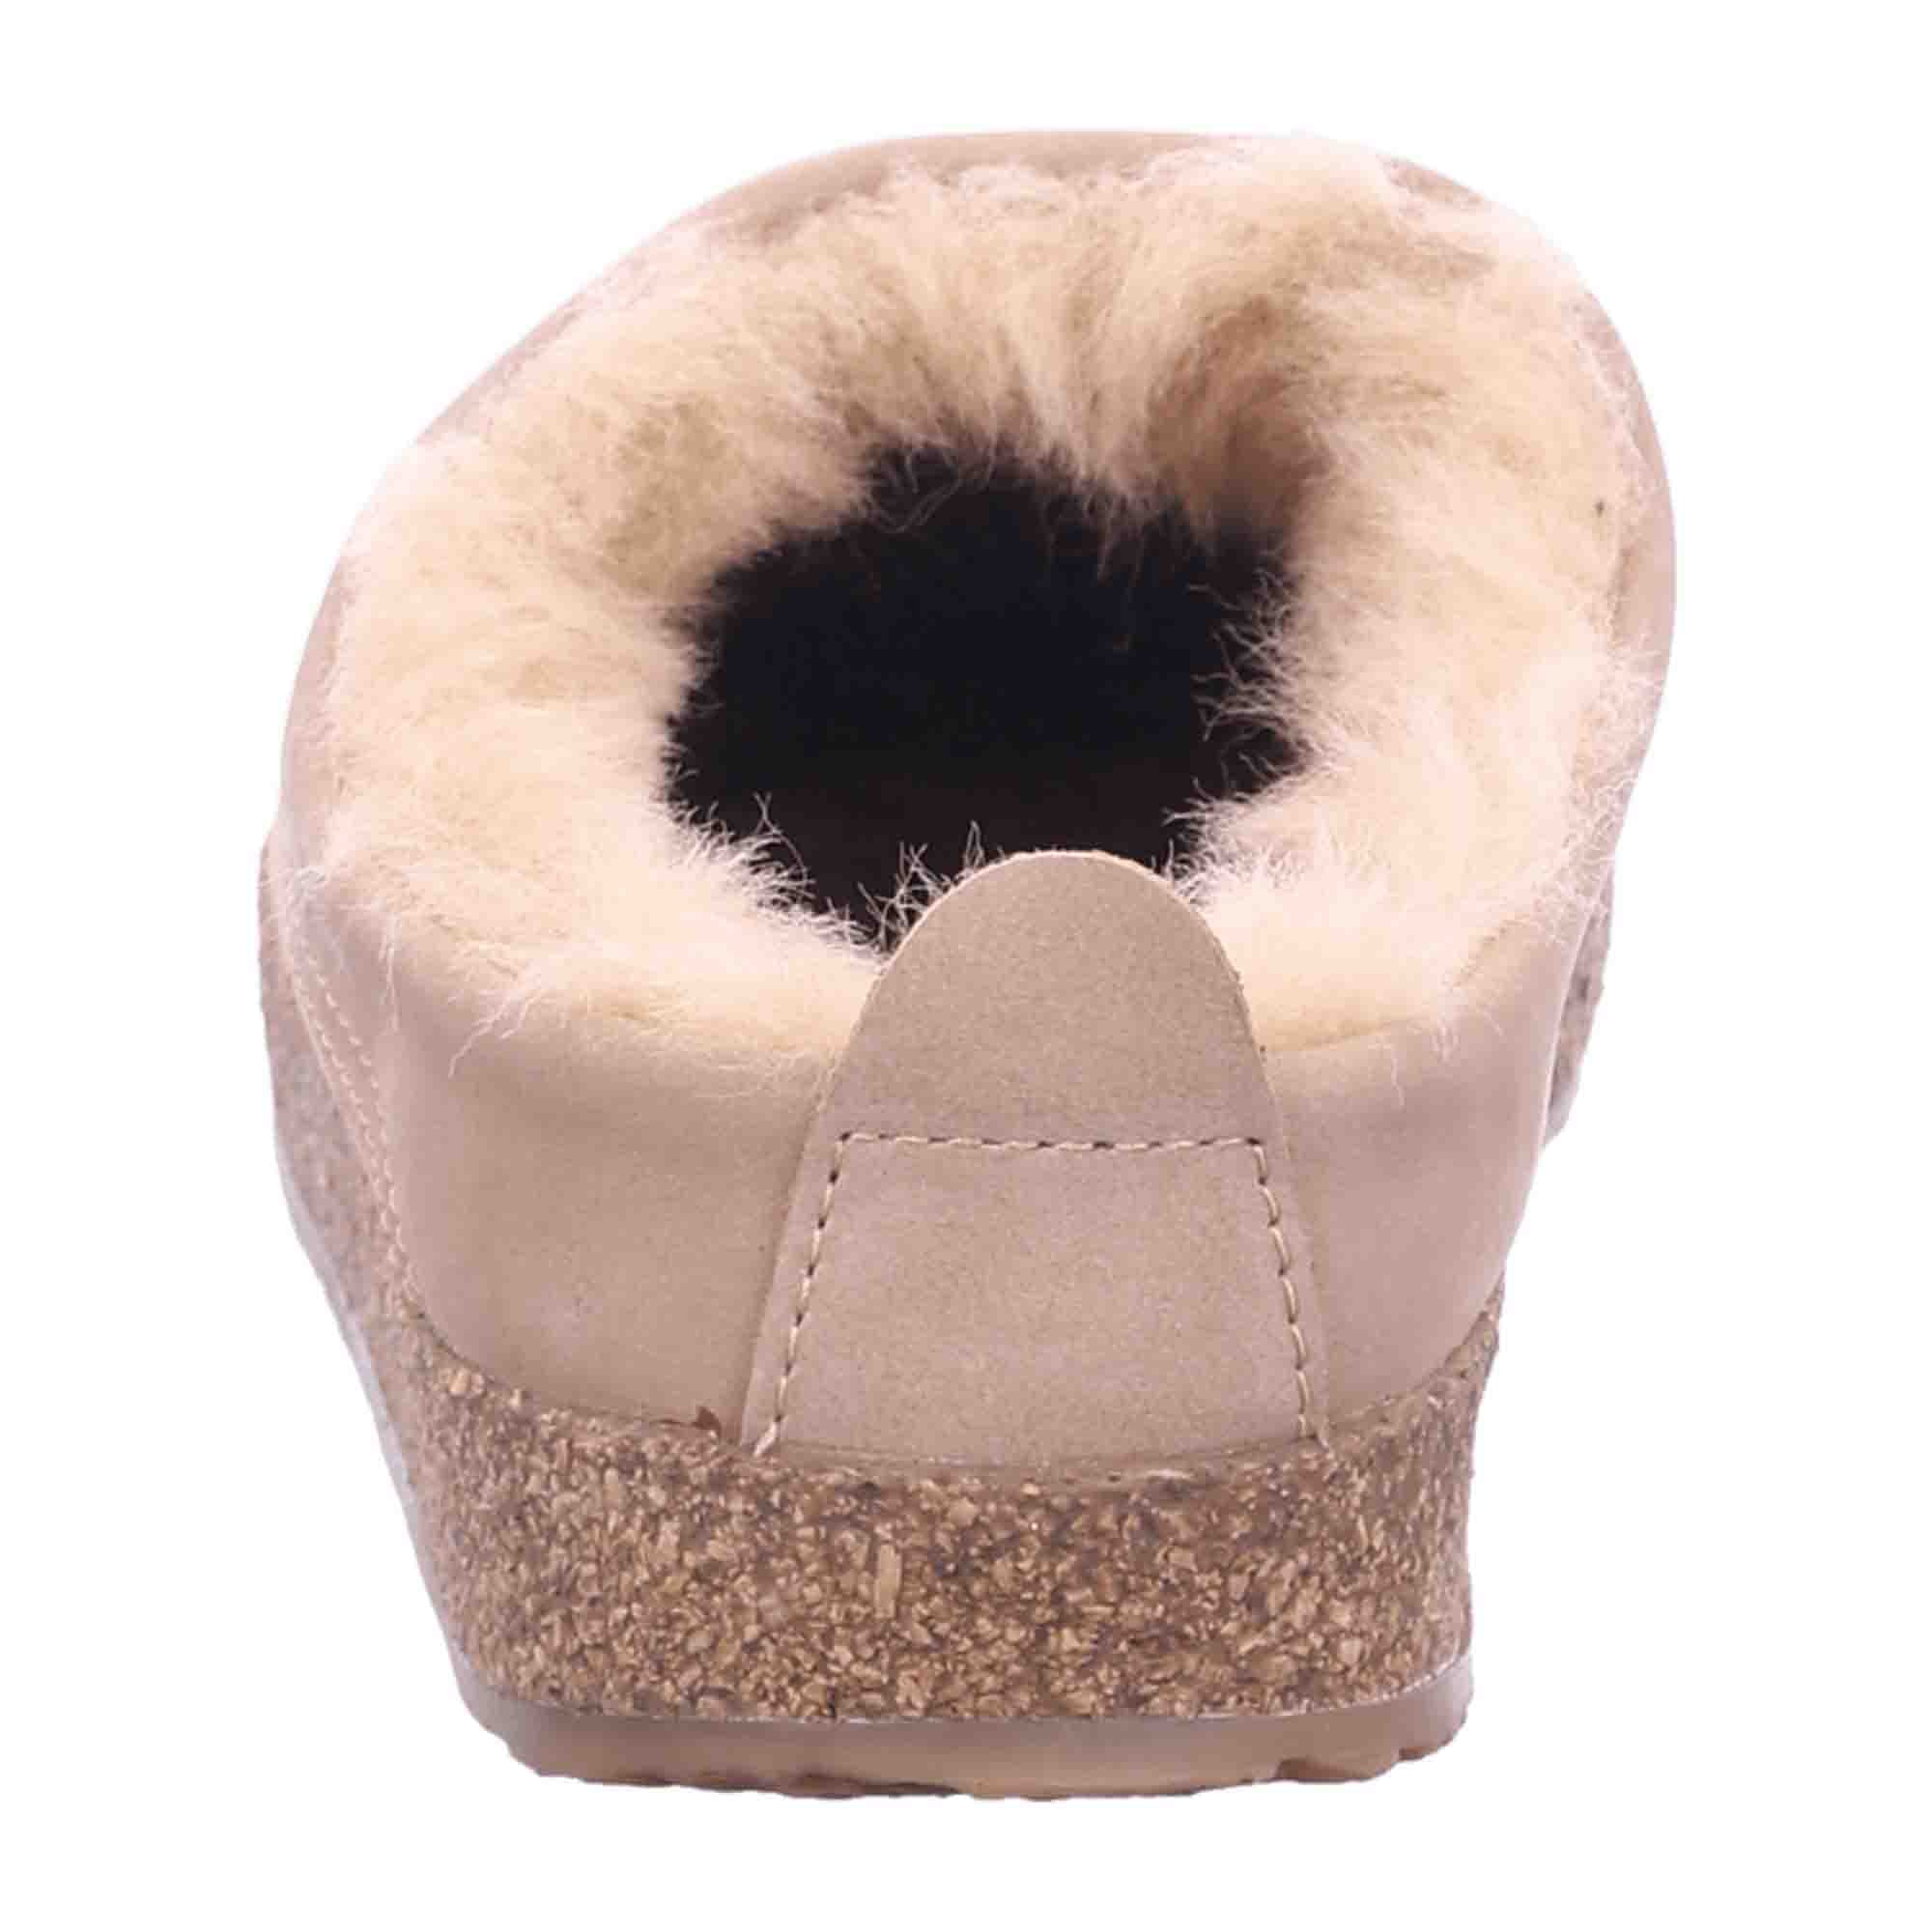 Haflinger Women’s 713015 Slippers in Beige – Stylish & Comfortable